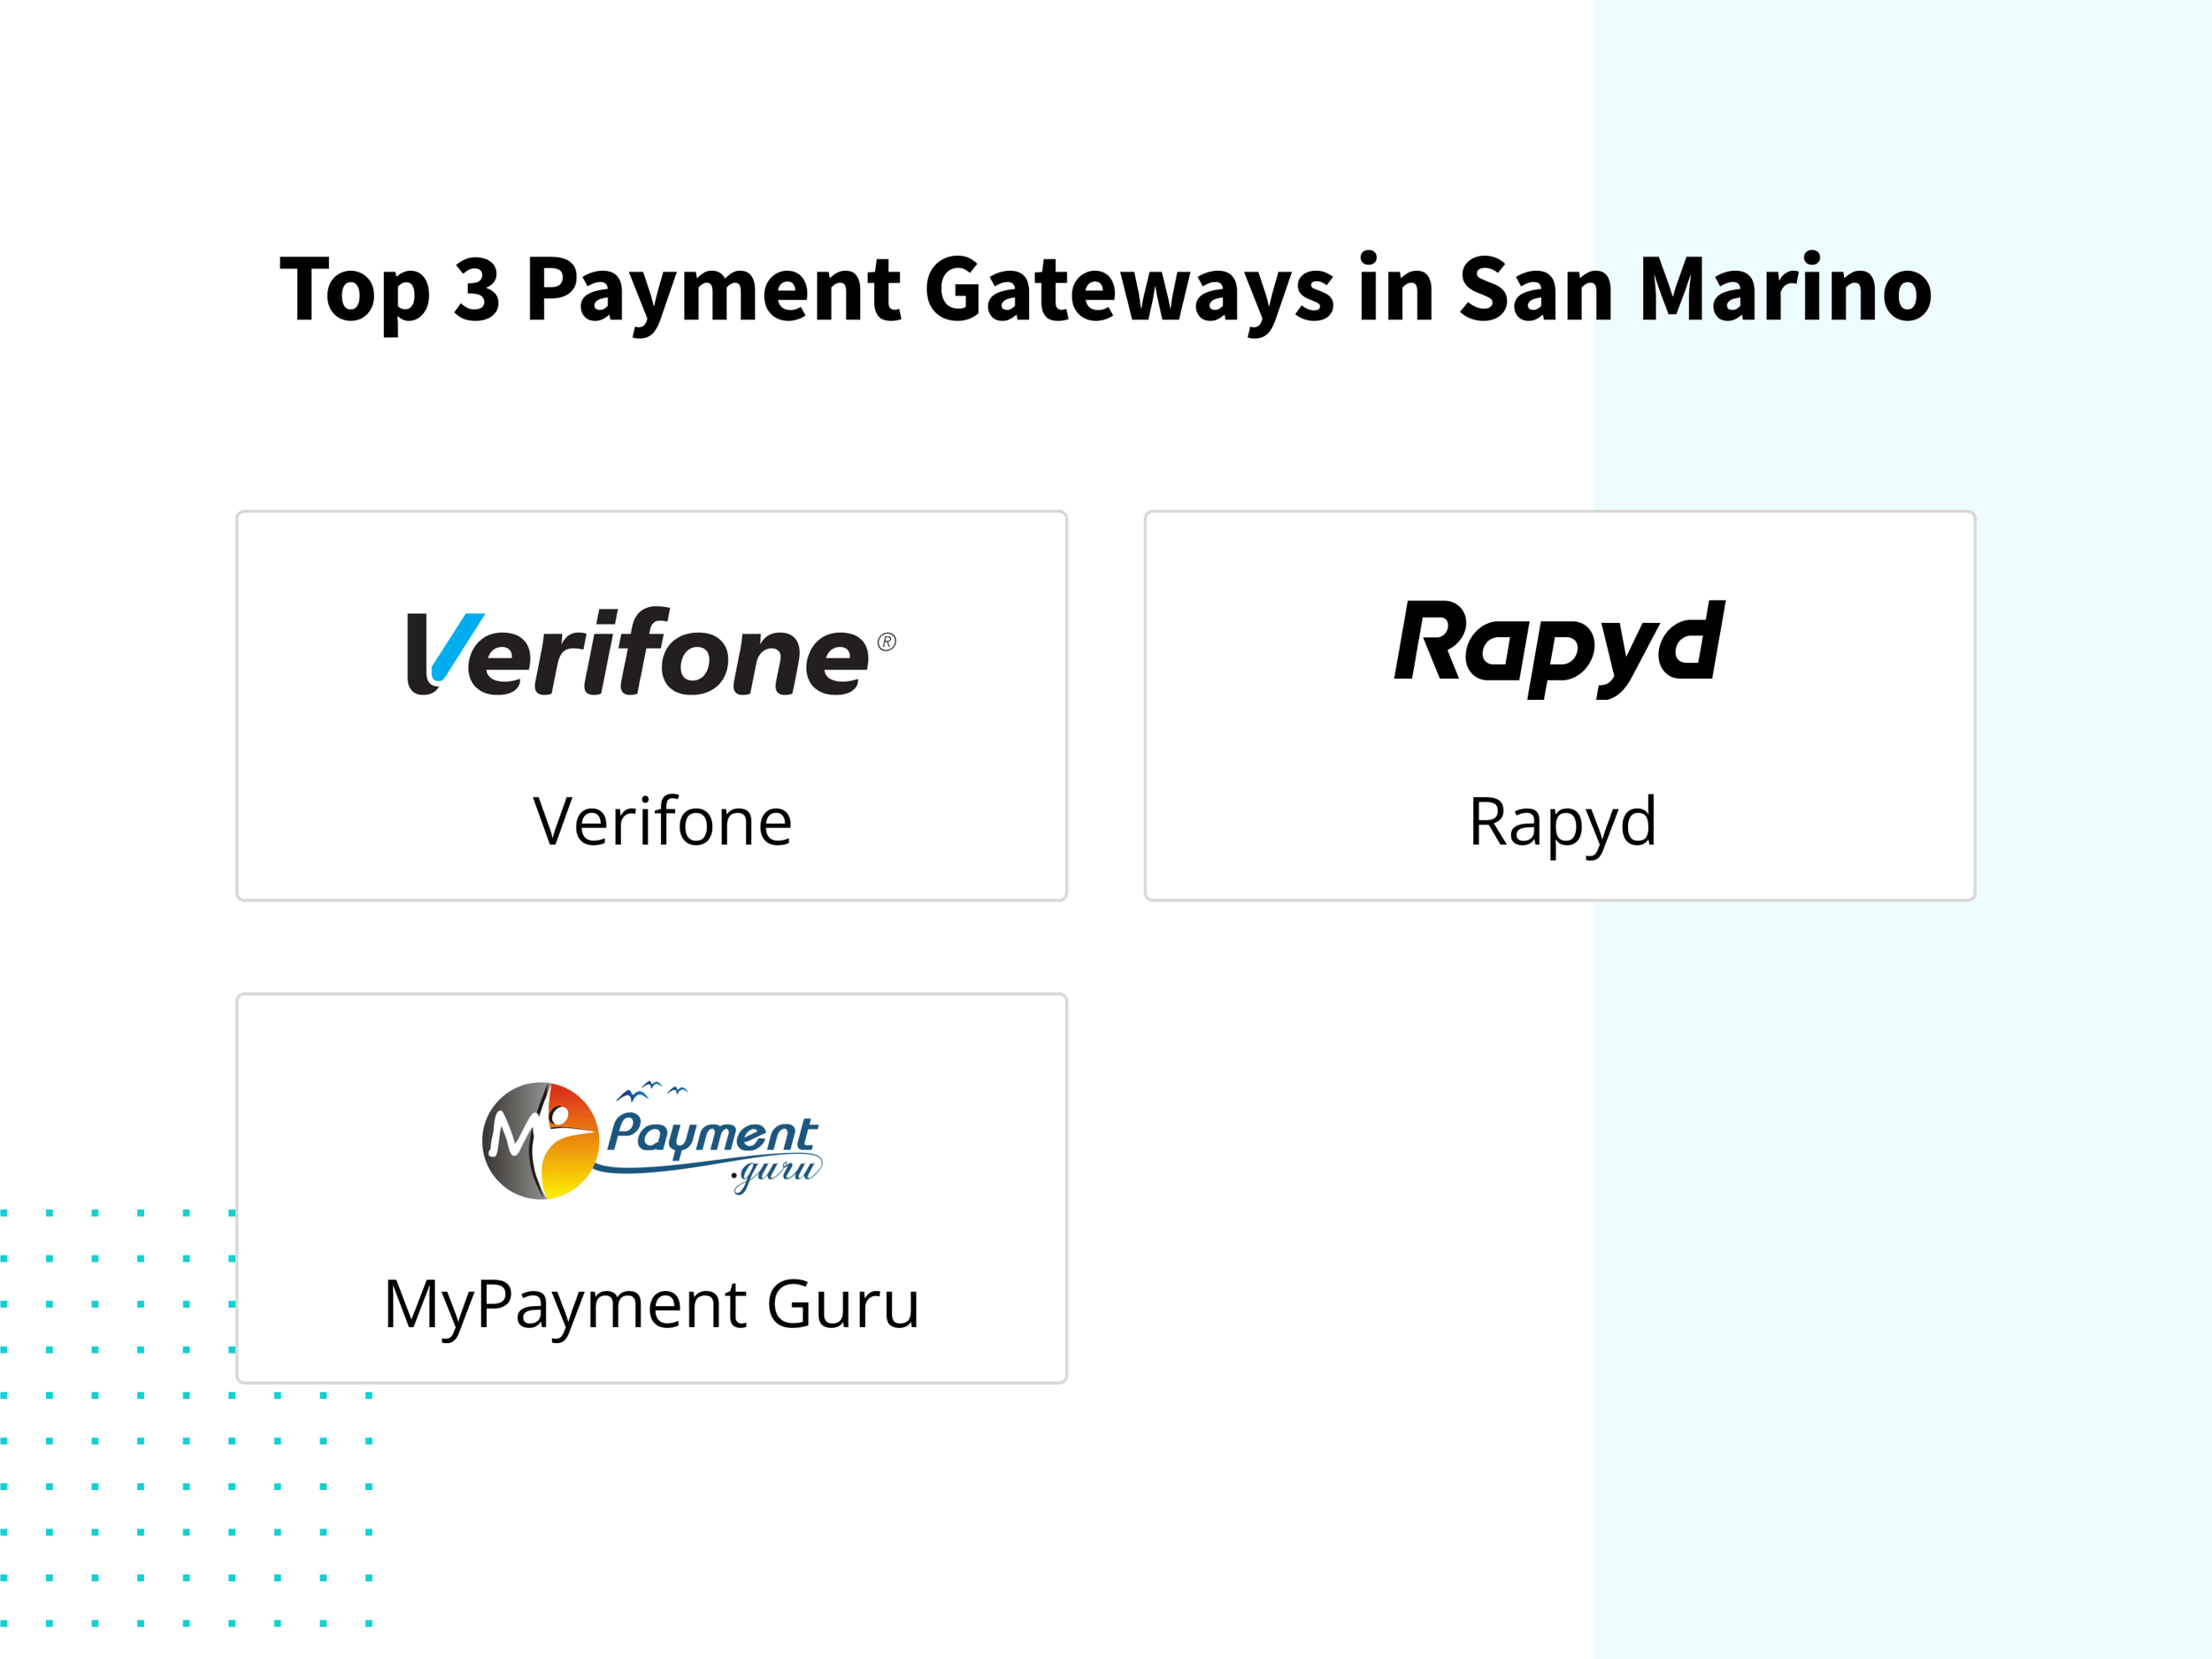 Top 3 payment gateway in San Marino